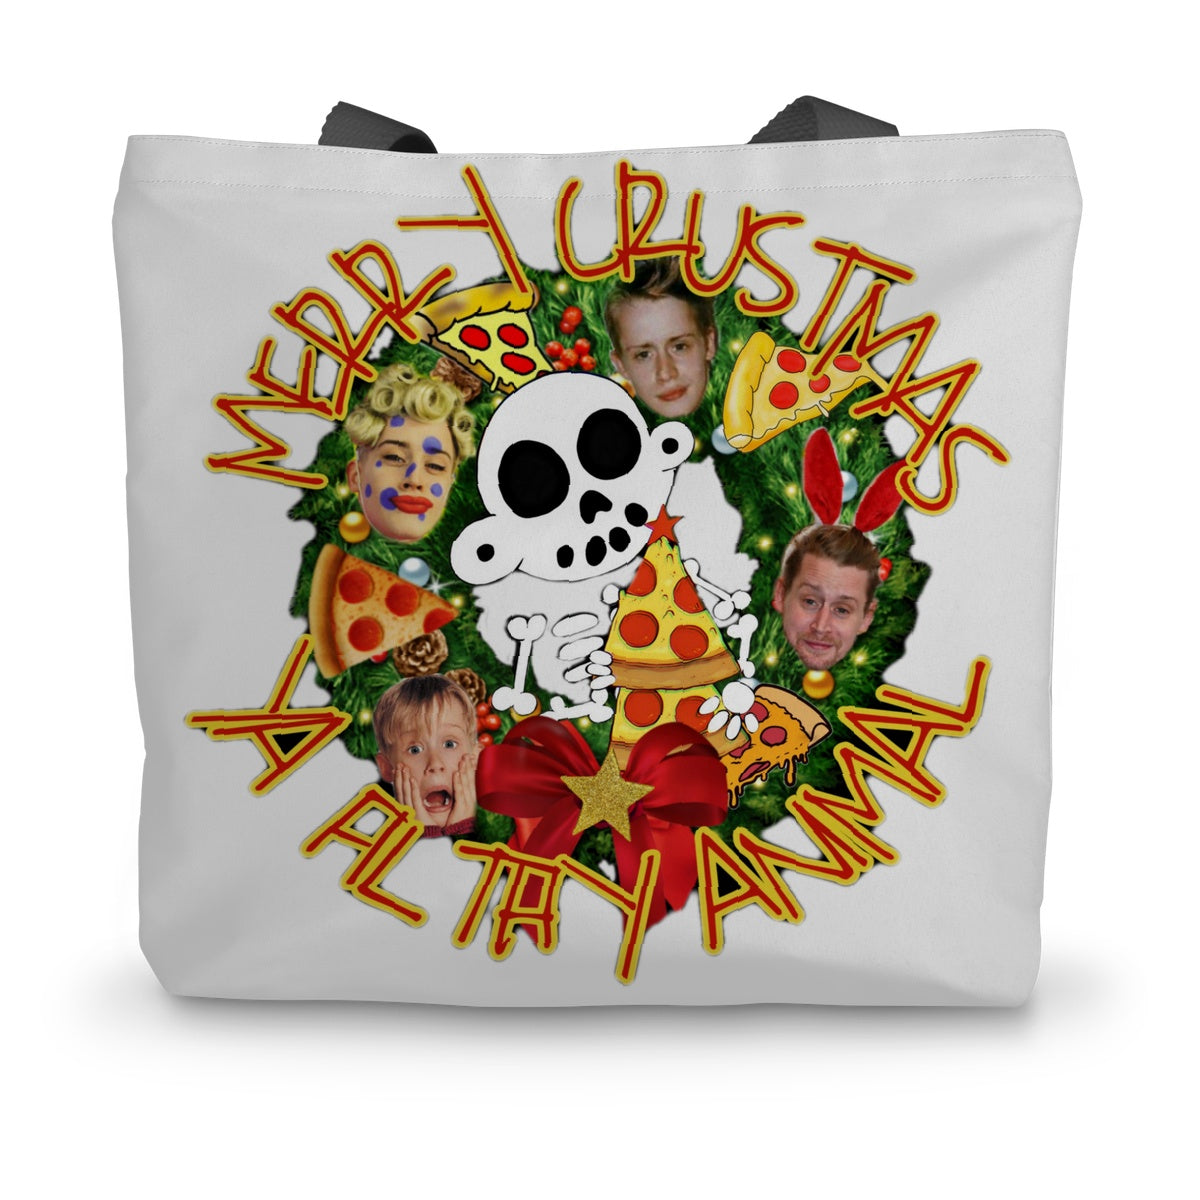 Zanoskull - "Merry Crustmas" (Canvas Tote Bag)